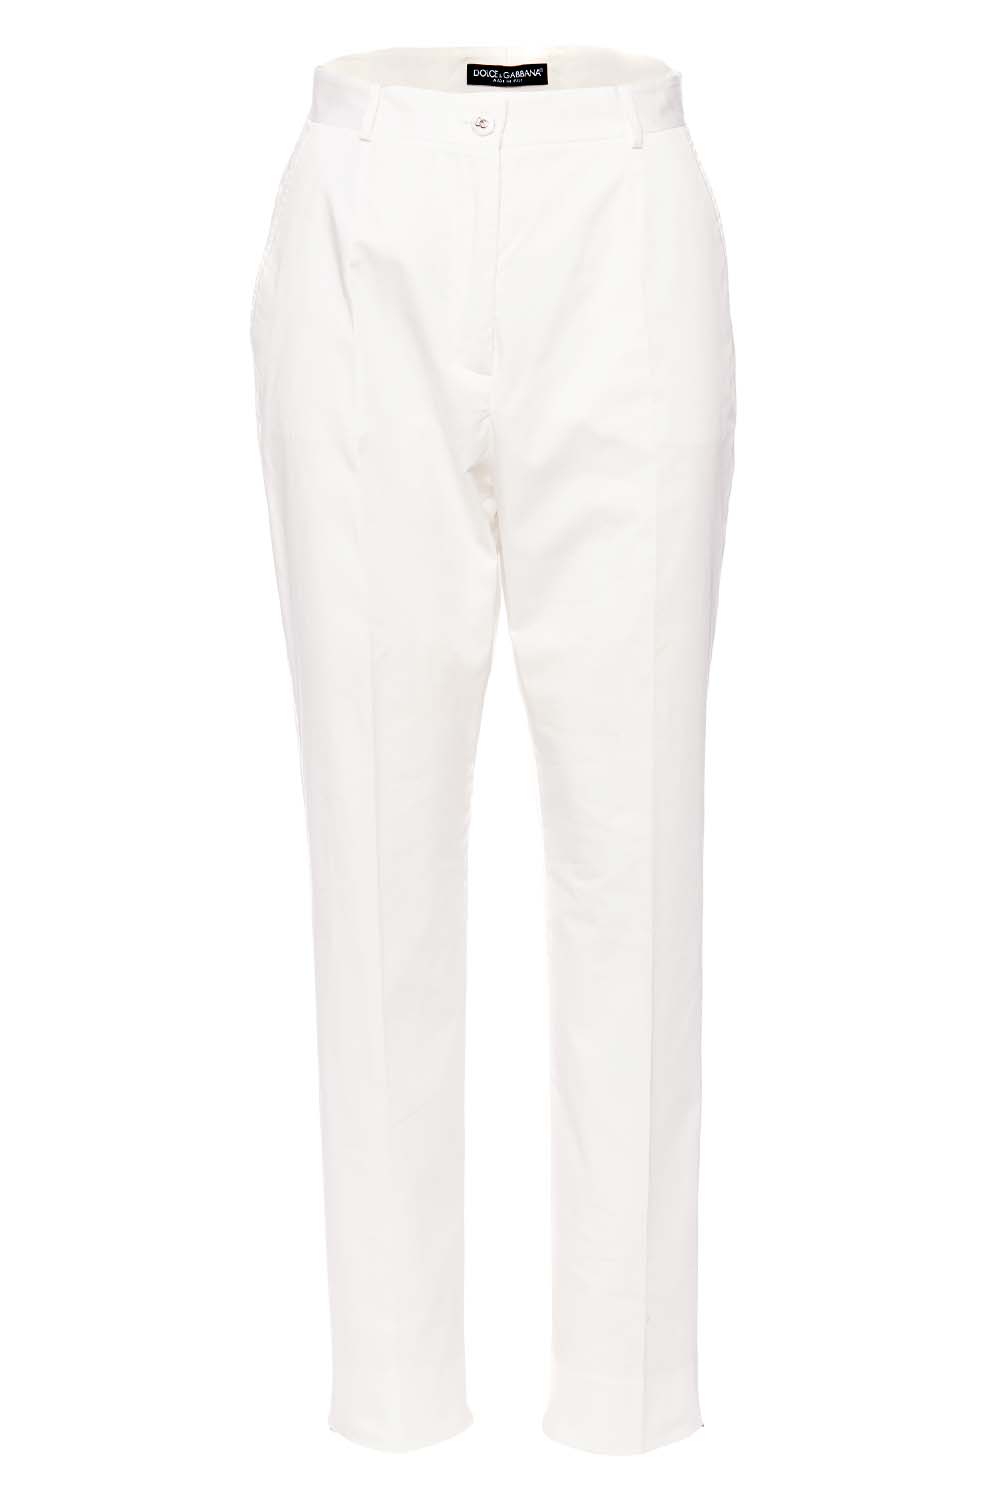 Dolce & Gabbana DNA White Tailored Cotton Pants